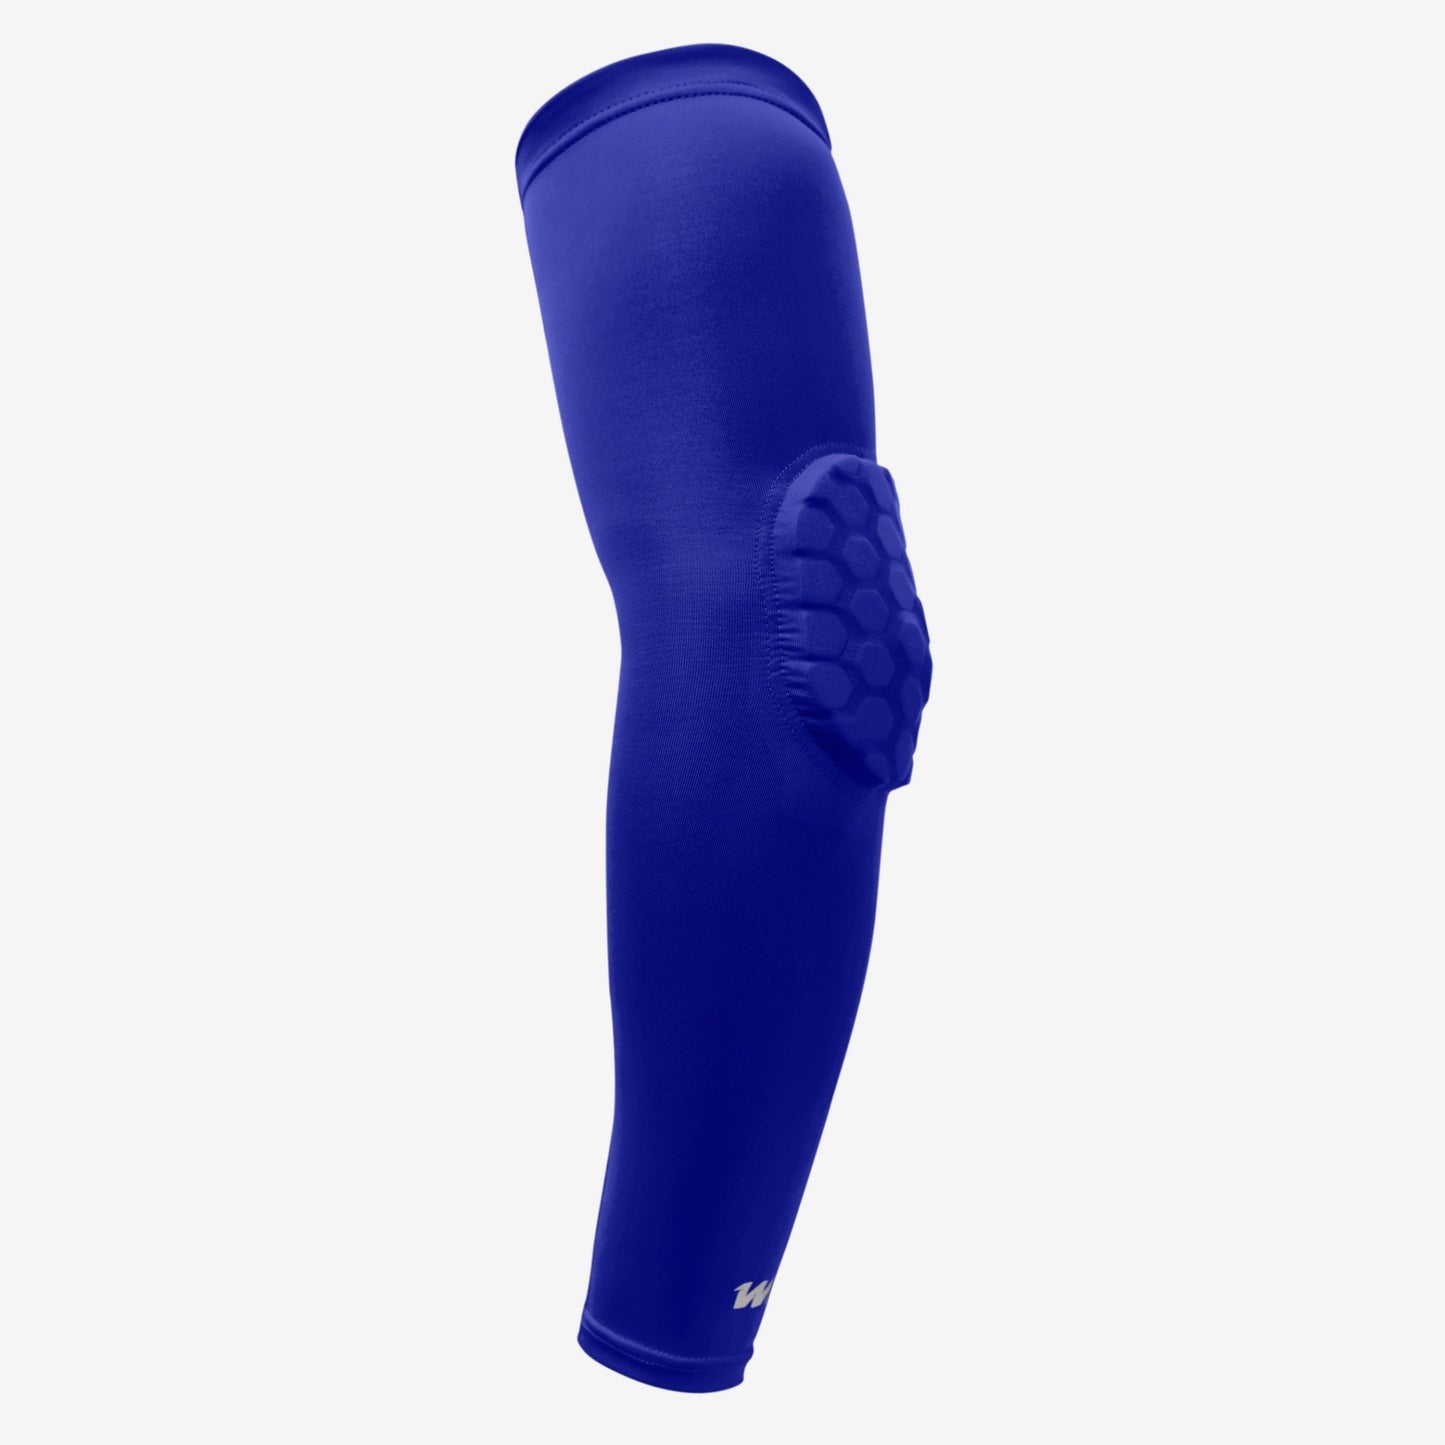 PADDED ARM SLEEVE (BLUE) - We Ball Sports